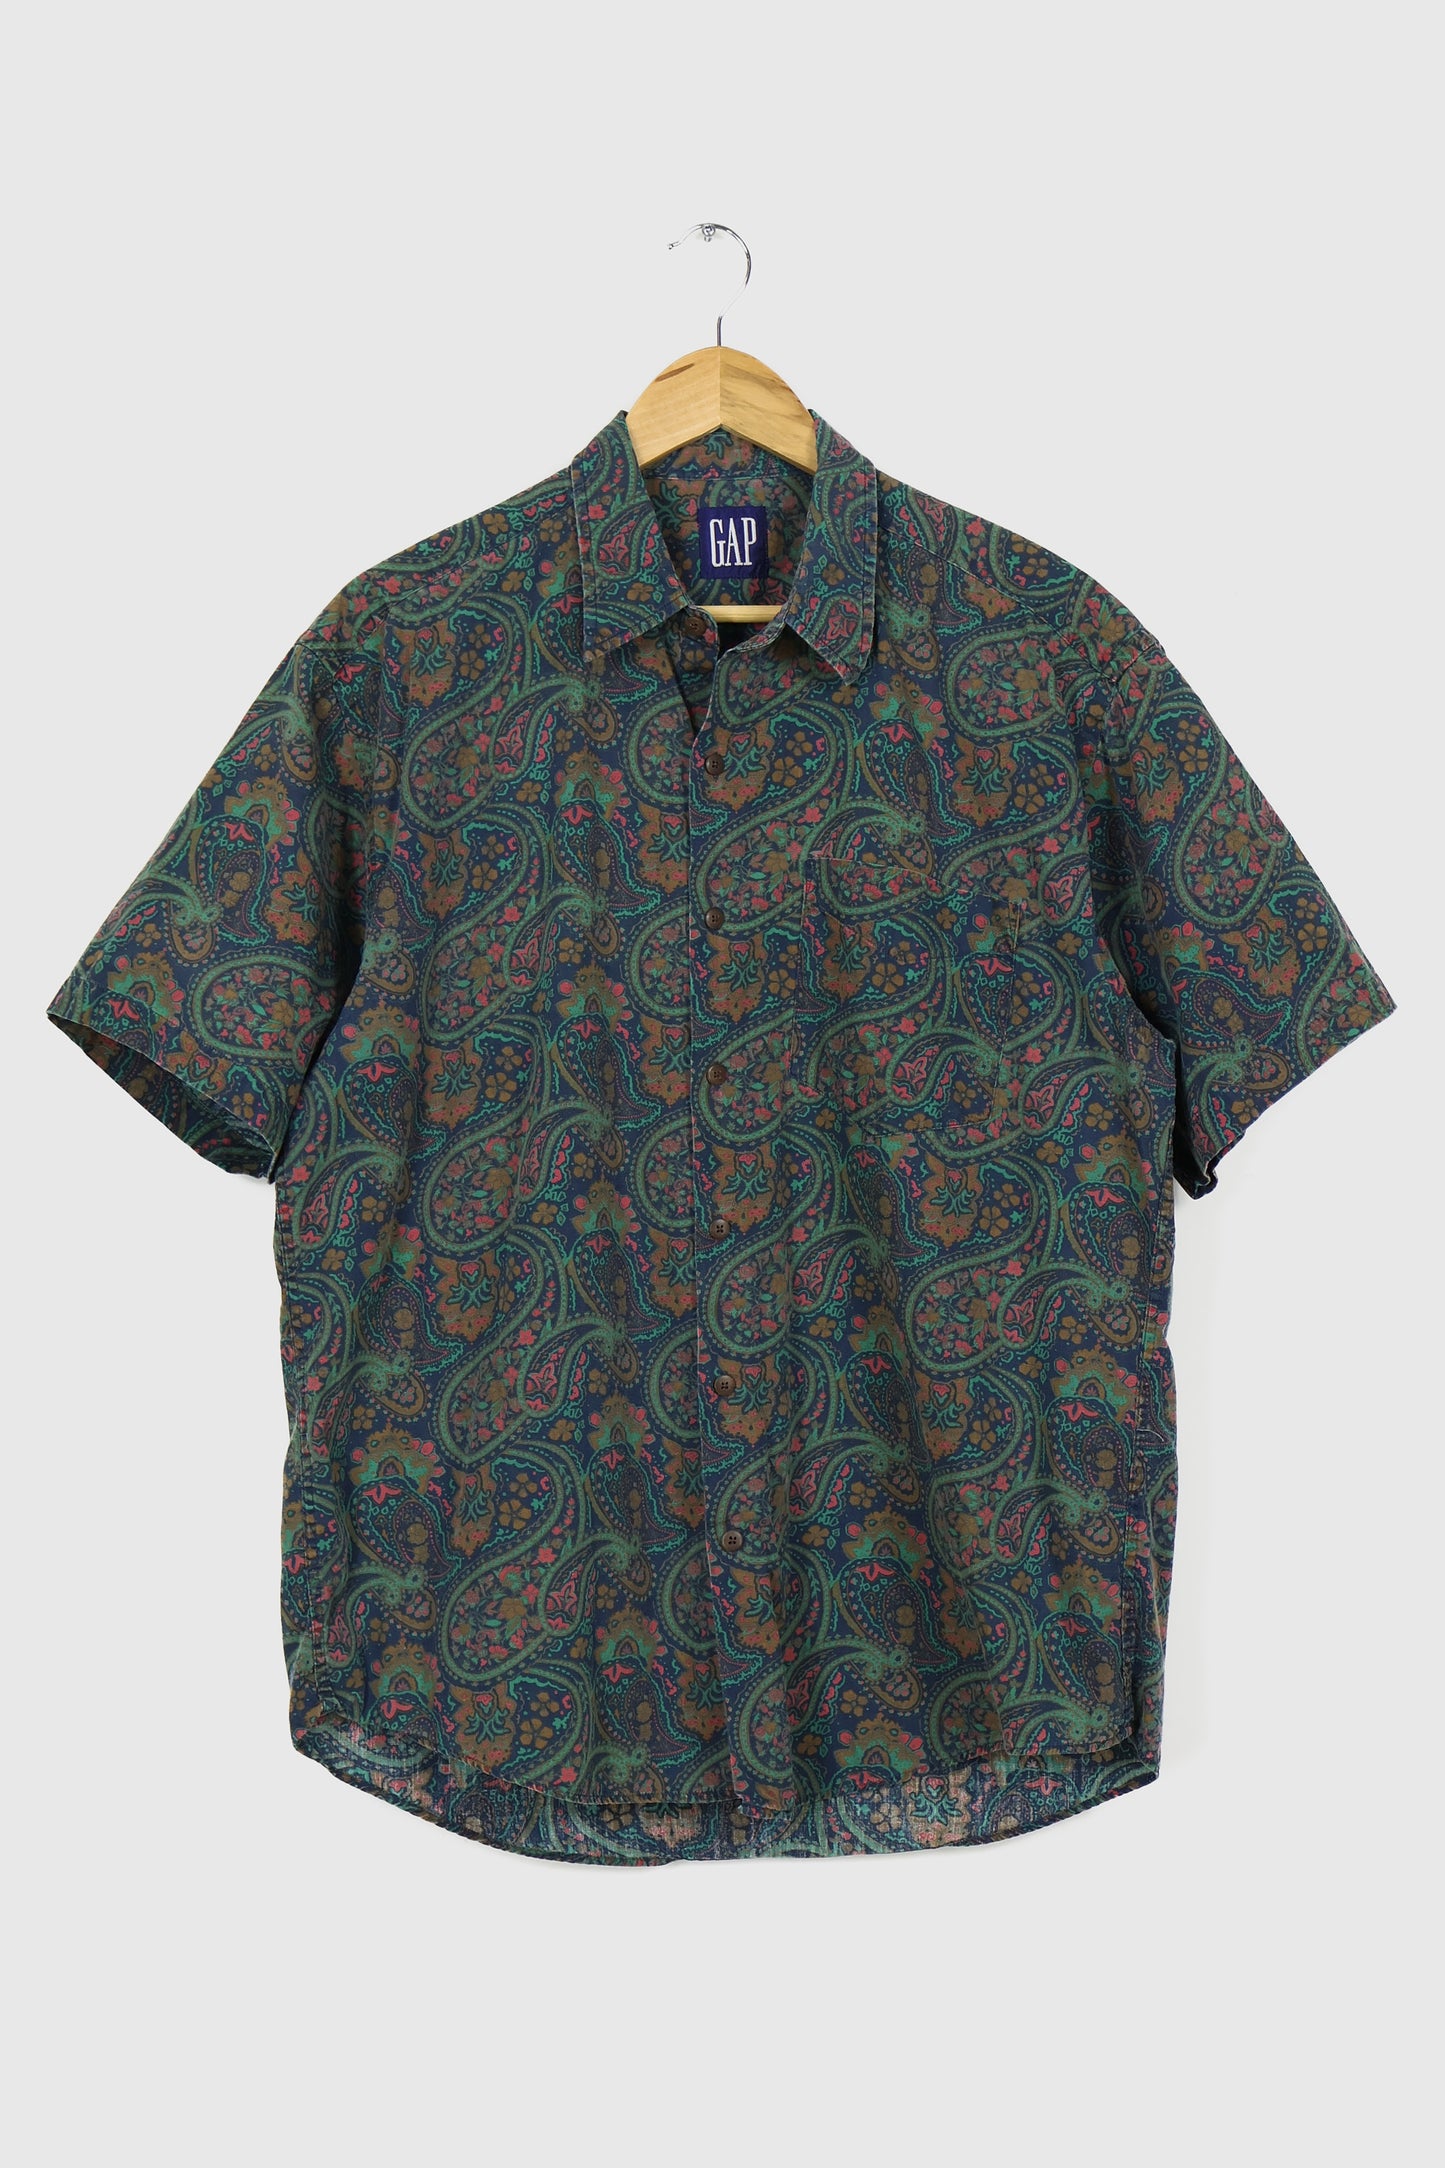 Vintage 90s GAP Paisley Pattern Short Sleeve Button-Down Shirt